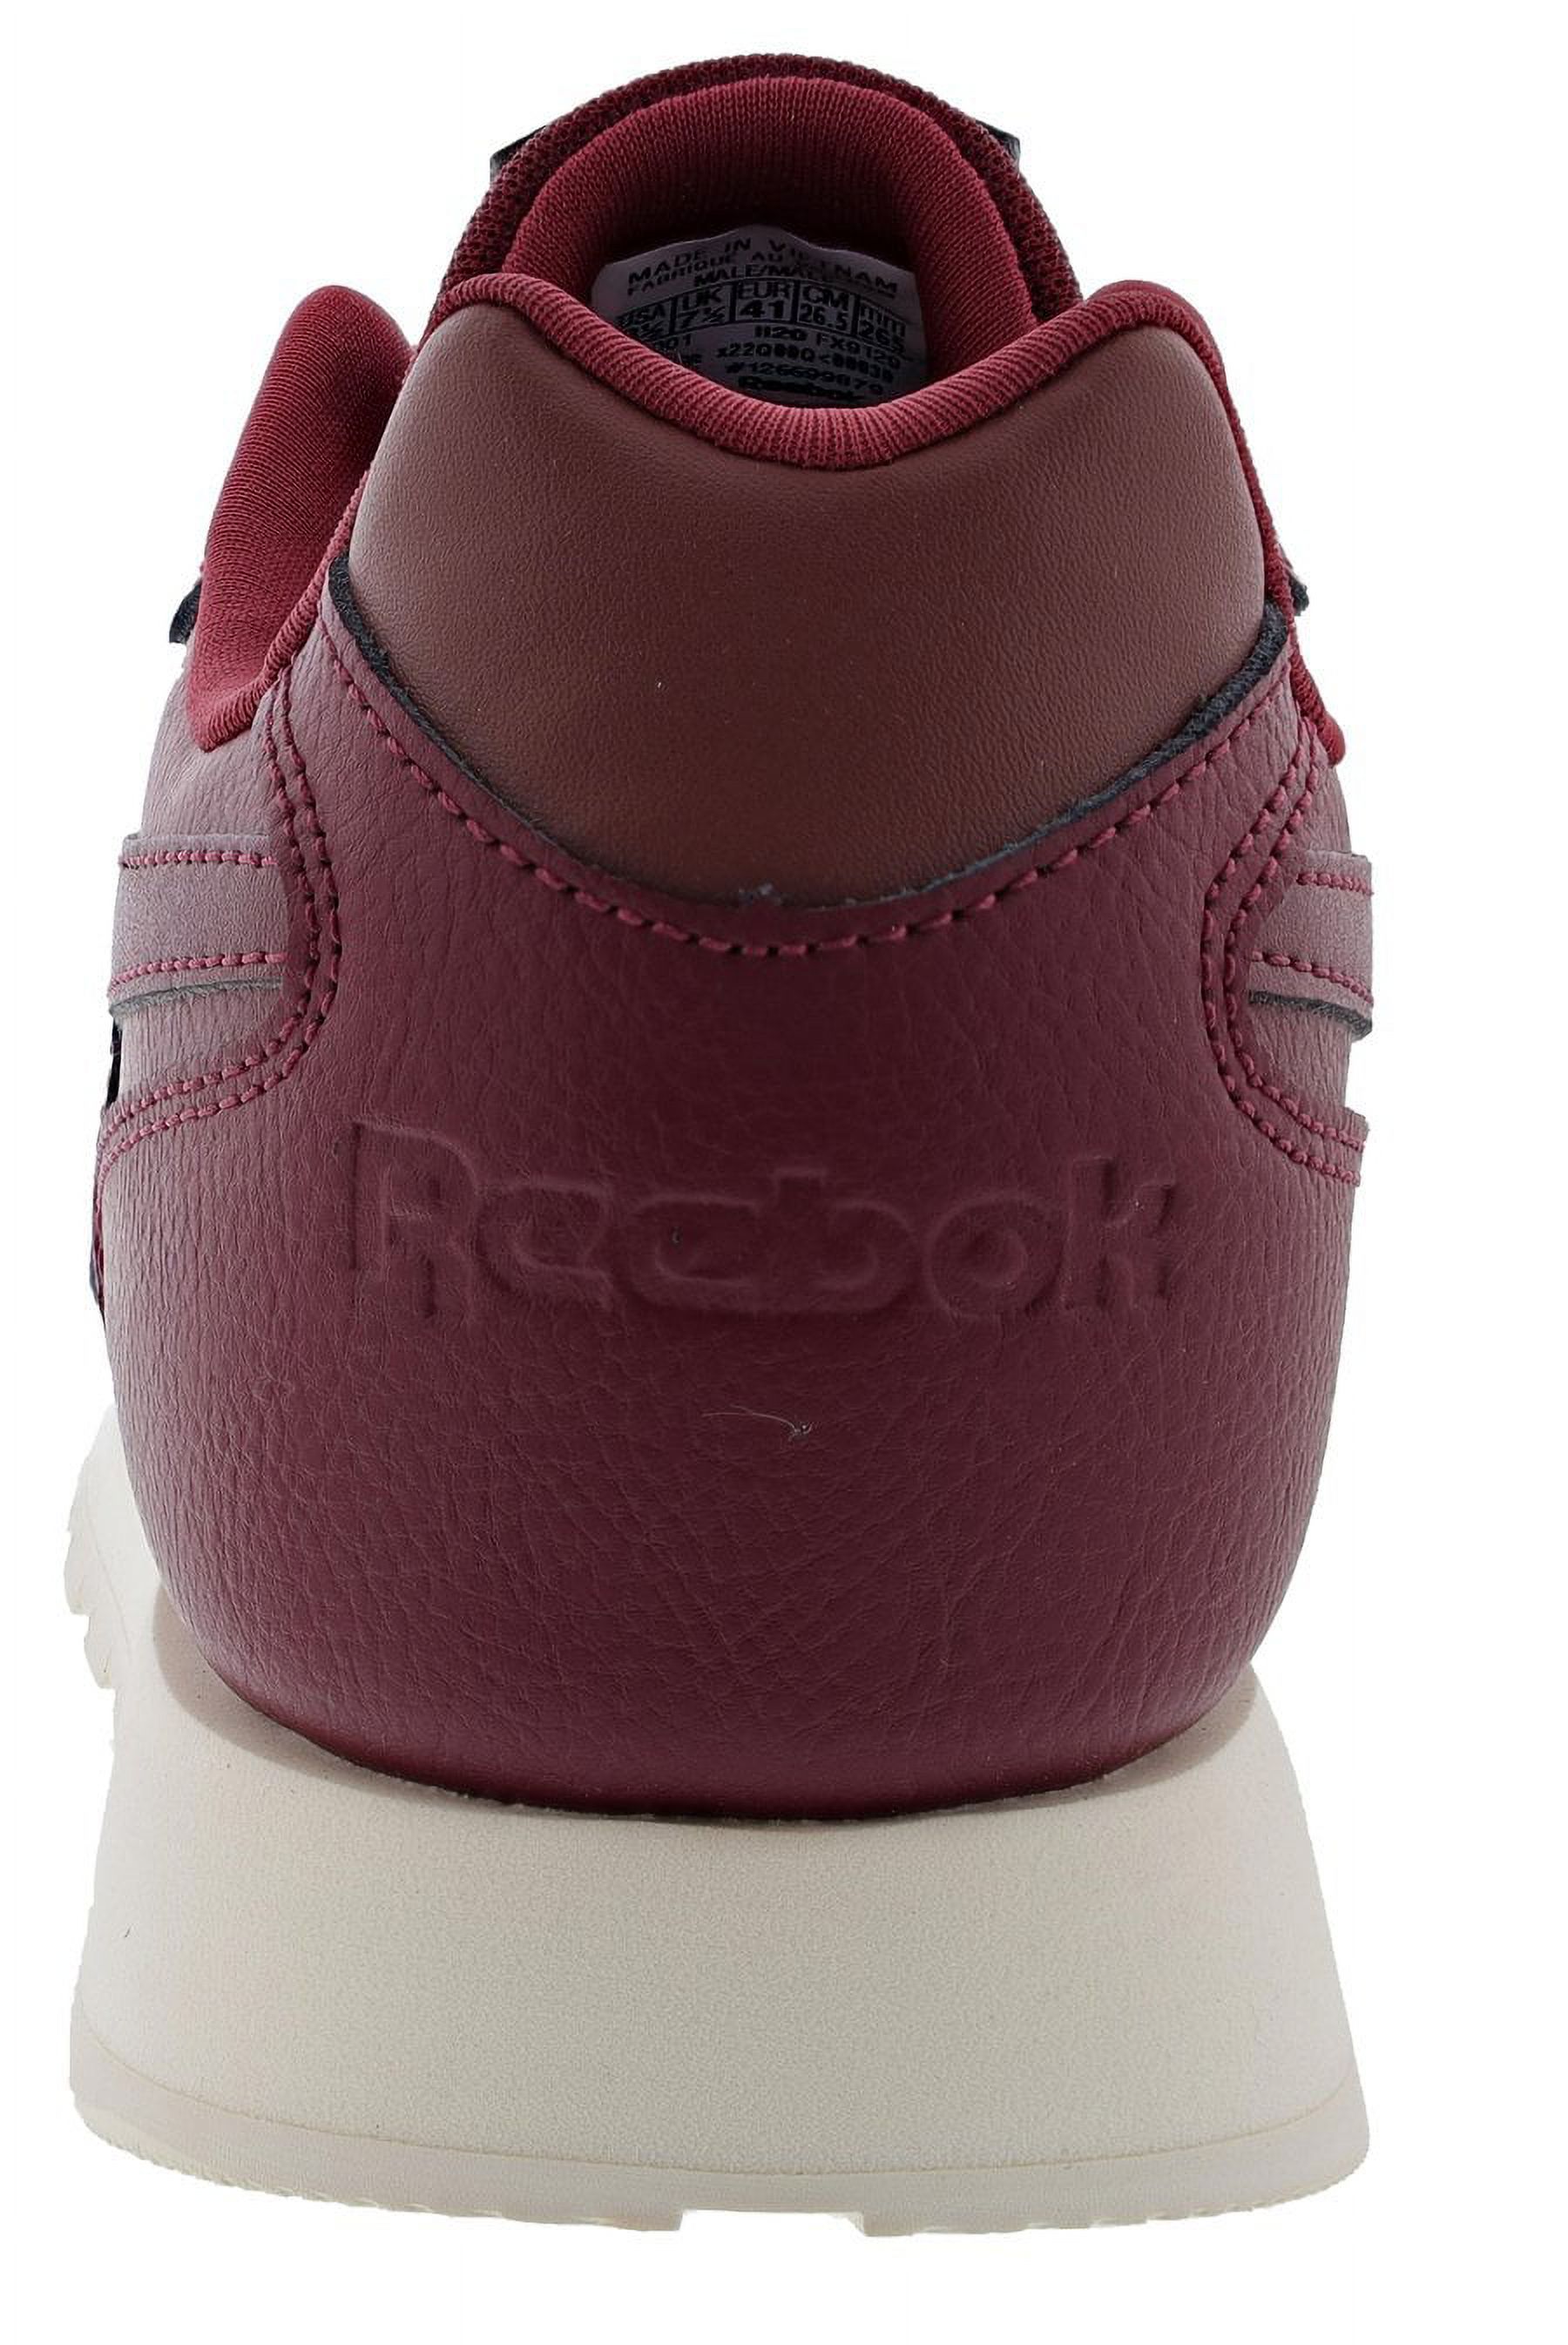 Reebok Men's Classic Harman Run Classic Retro Walking Shoes - image 4 of 5